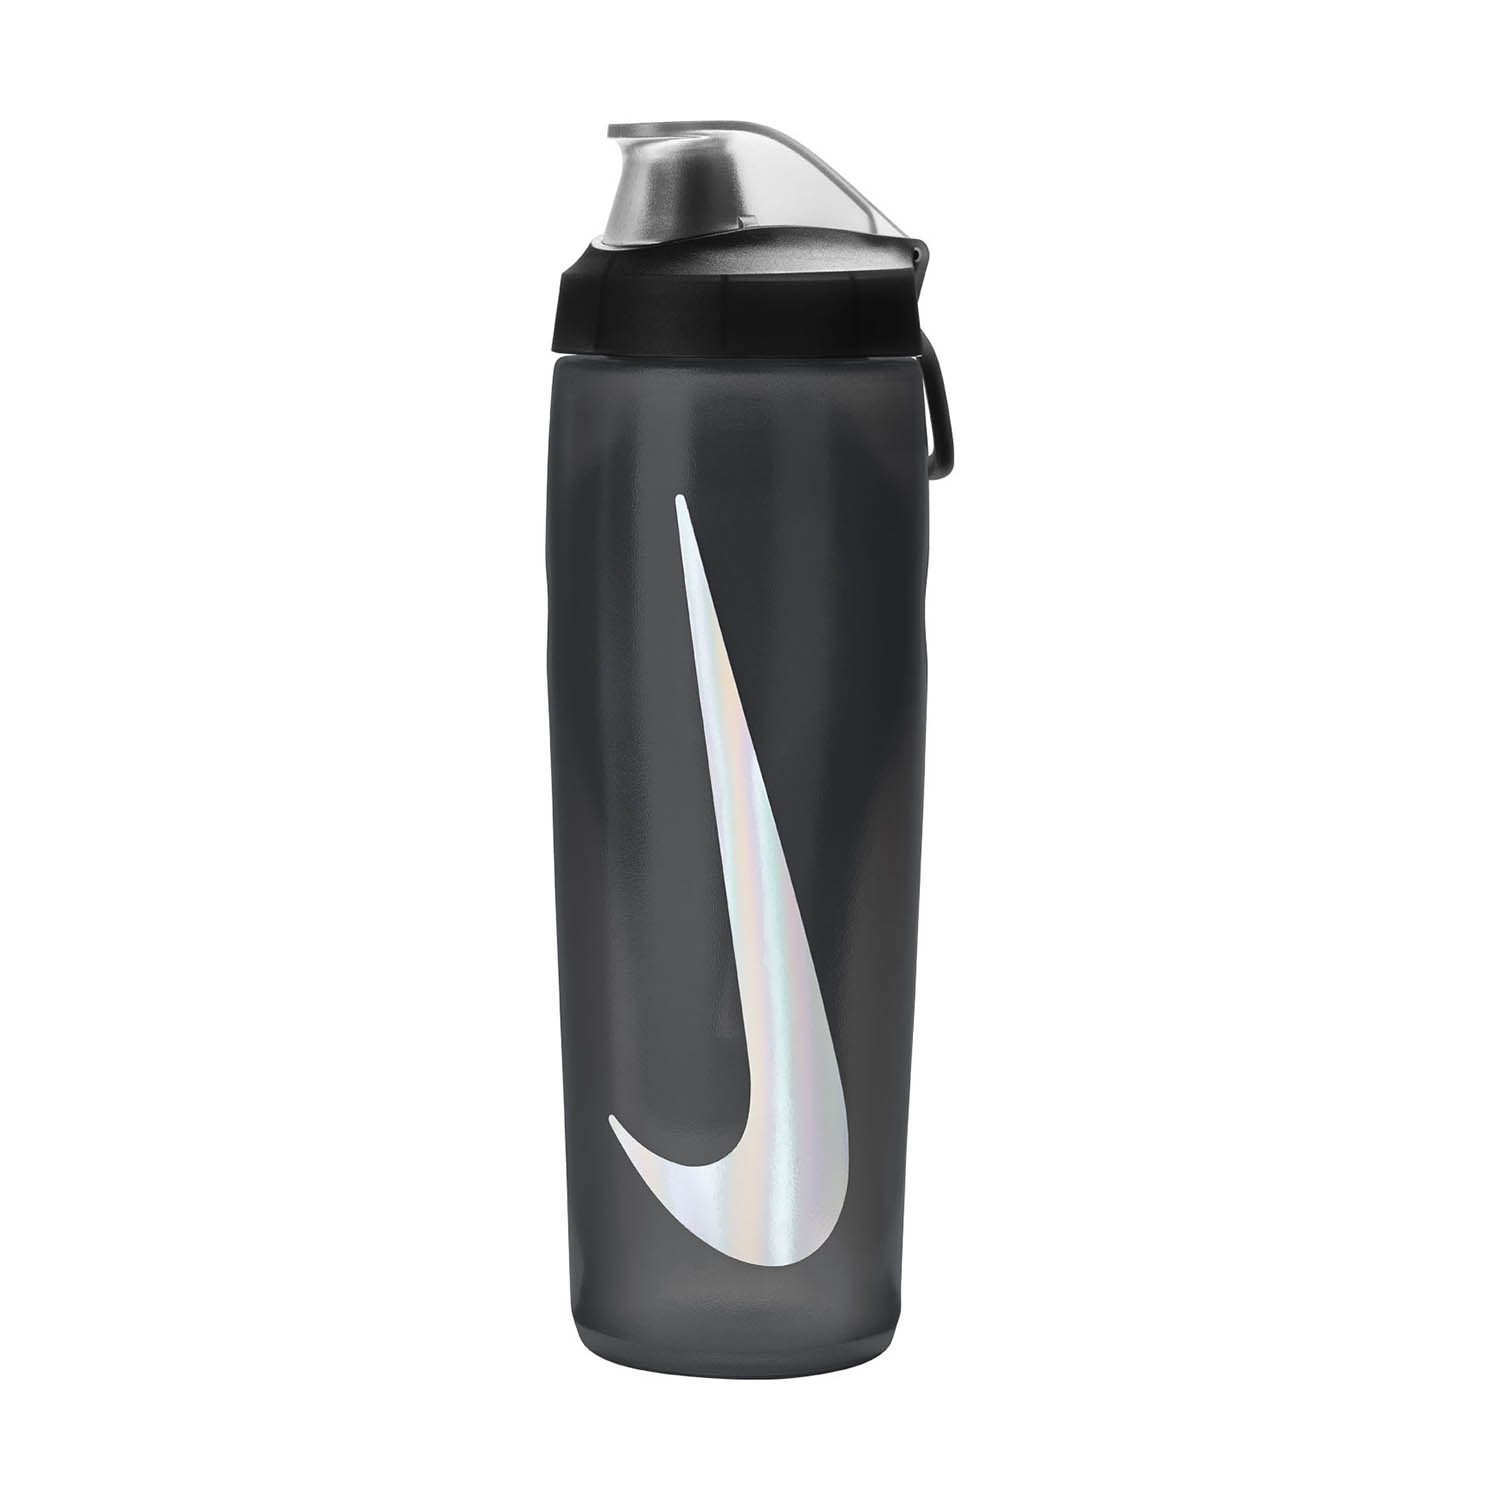 Nike Refuel Locking Water Bottle - Anthracite/Black/Silver Iridescent